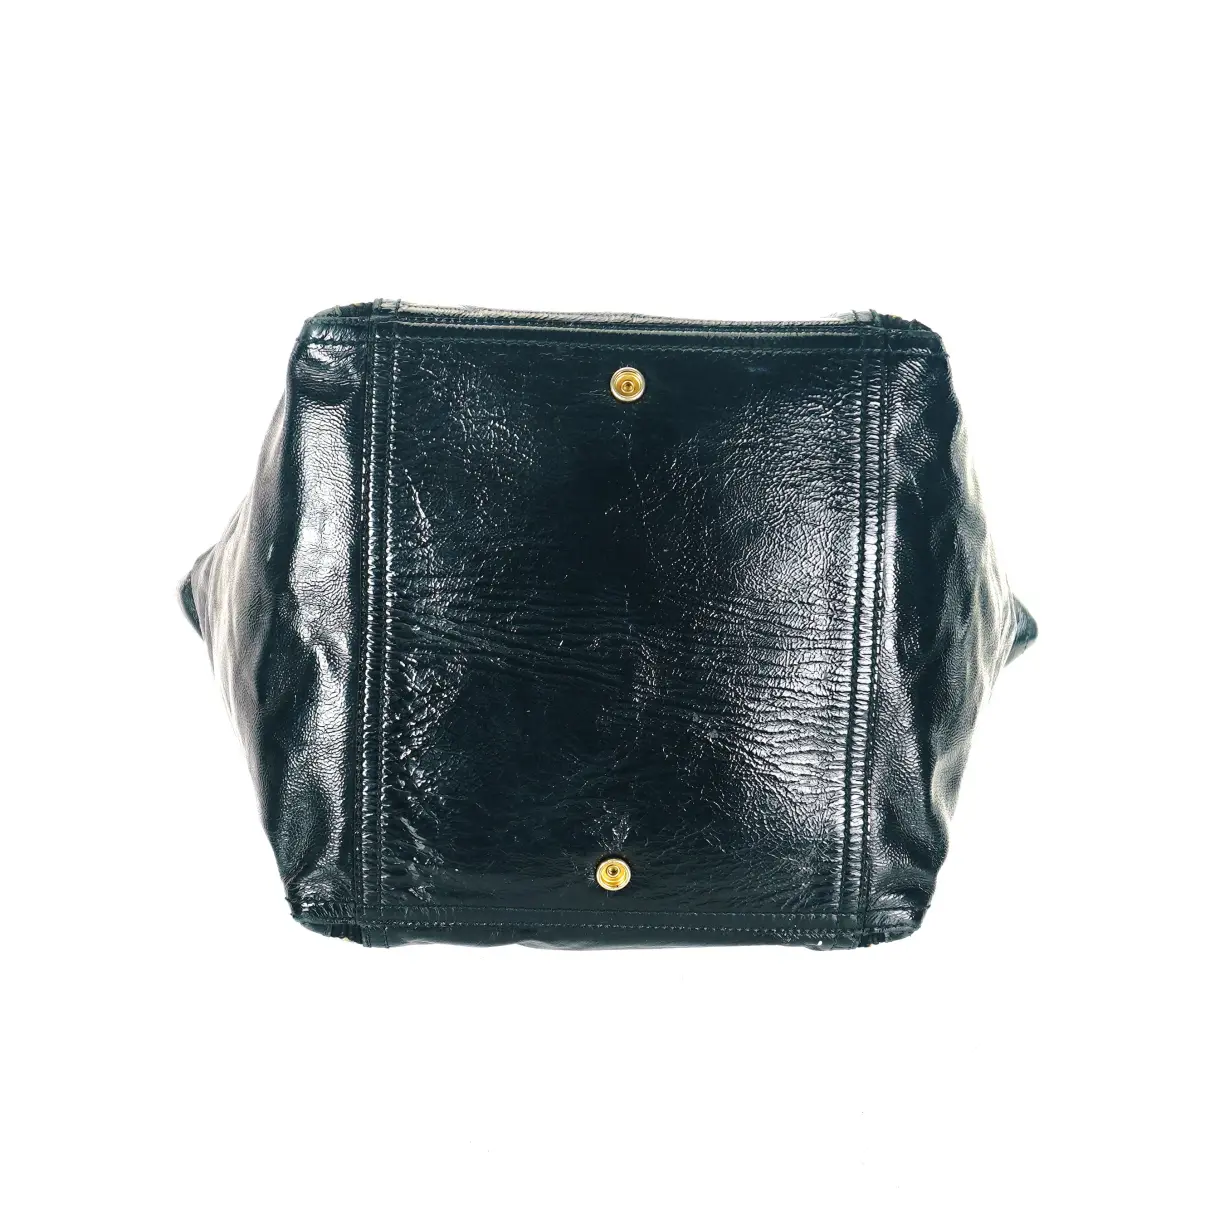 Downtown leather handbag Yves Saint Laurent - Vintage